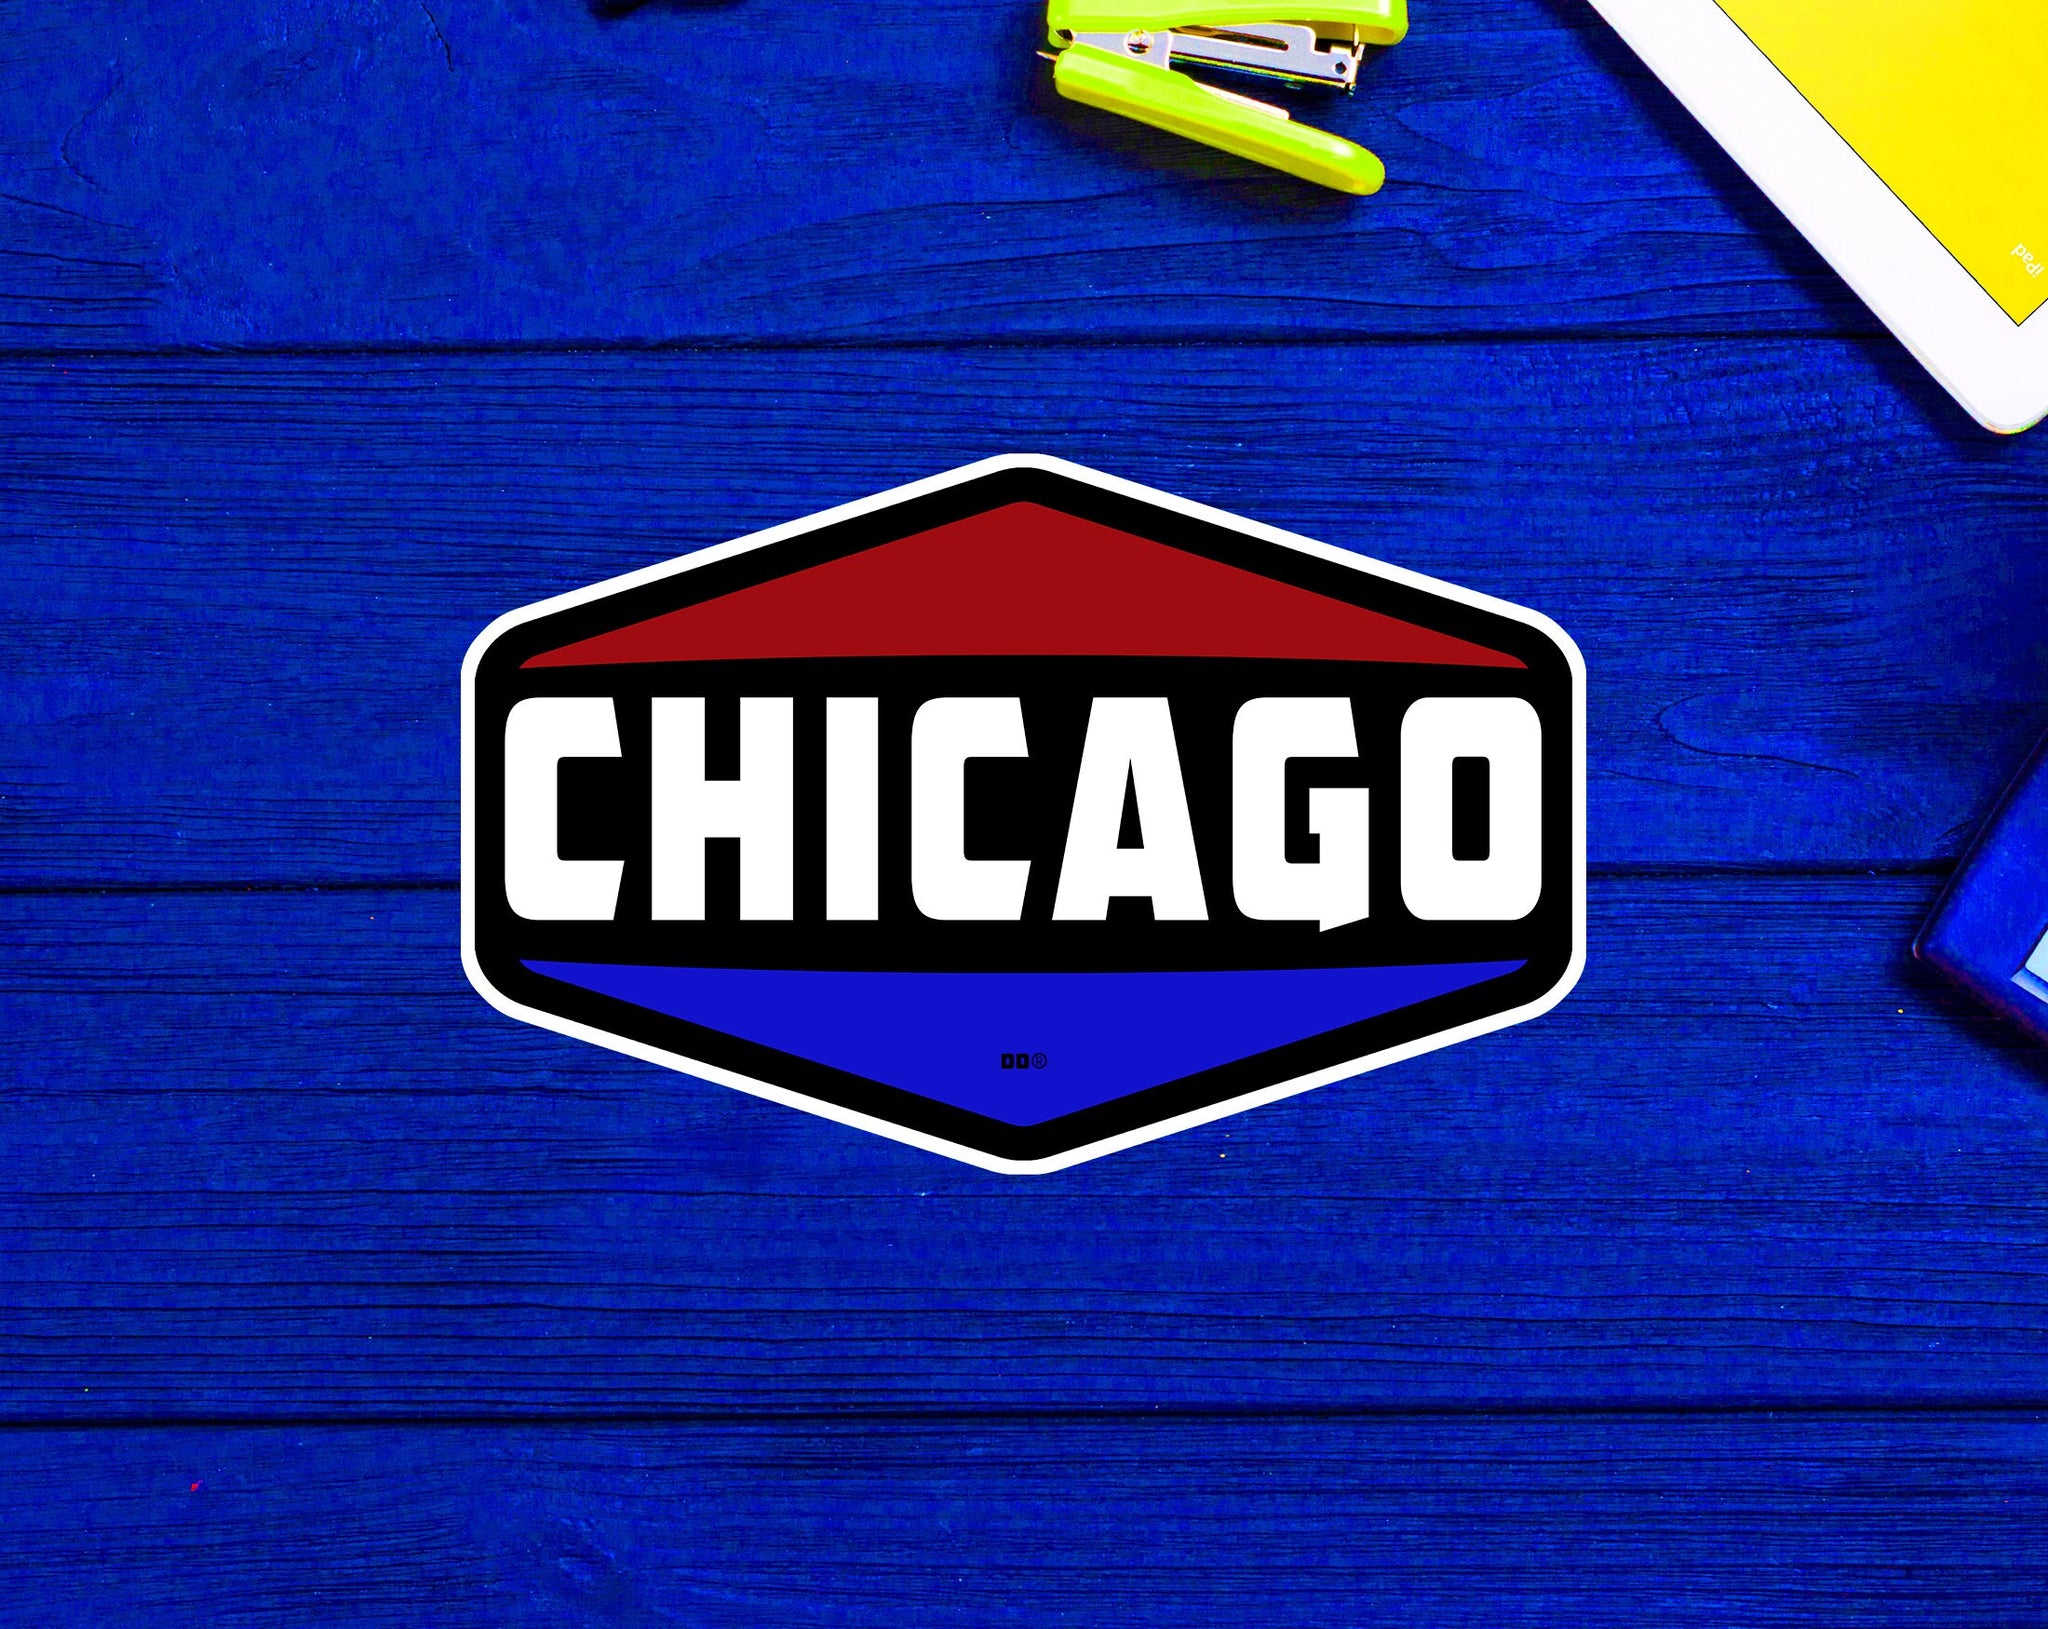 Chicago Illinois Sticker Decal 4"